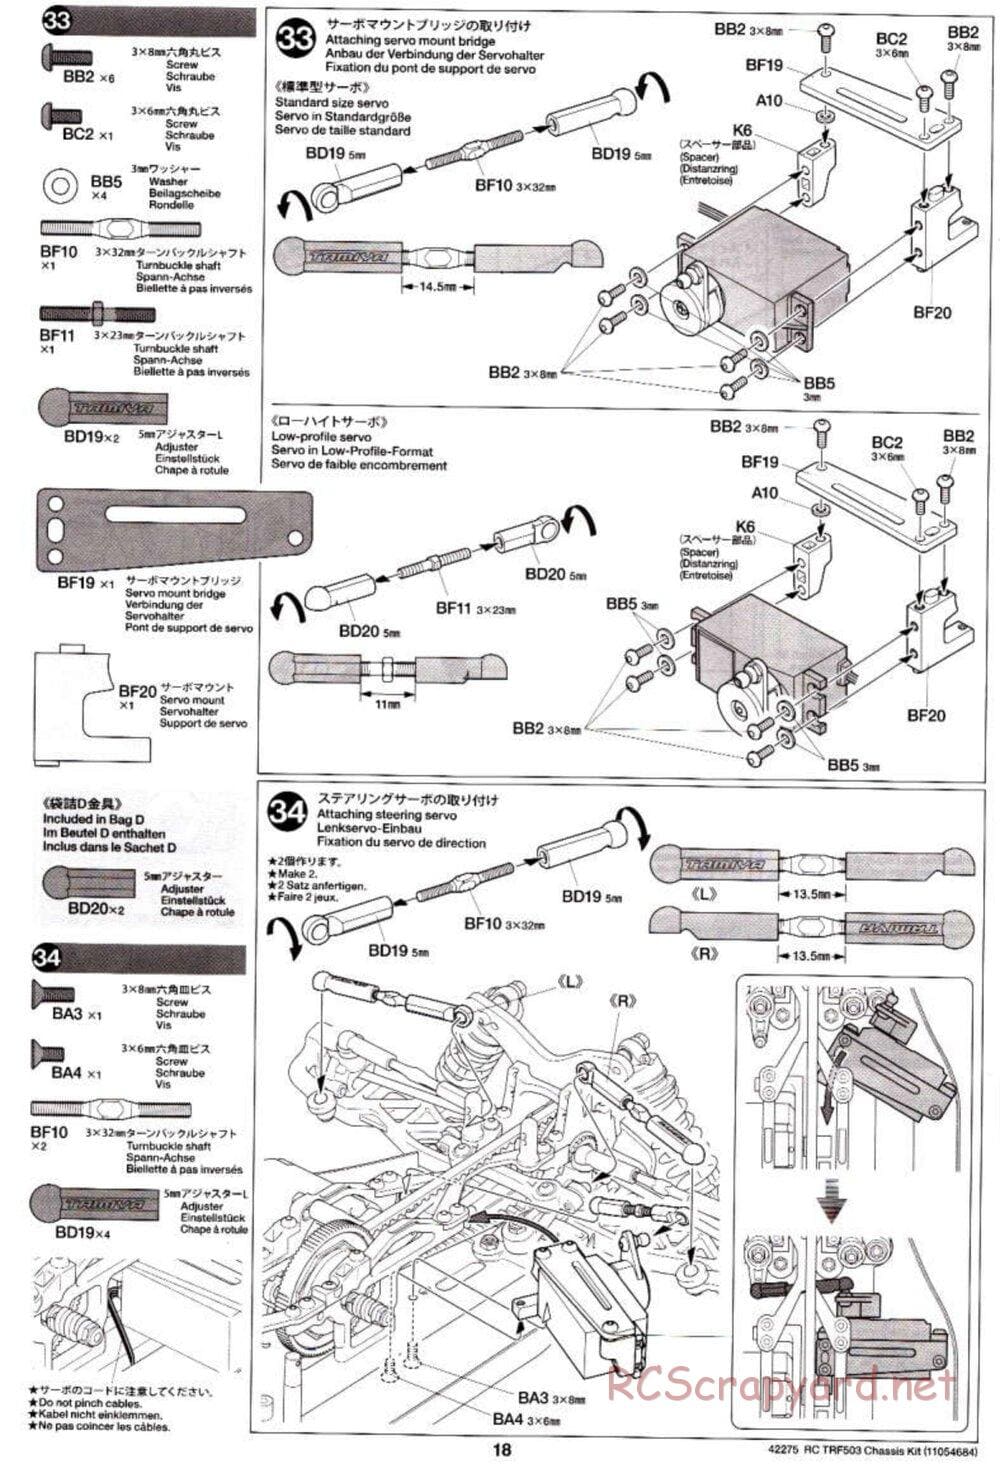 Tamiya - TRF503 Chassis - Manual - Page 18